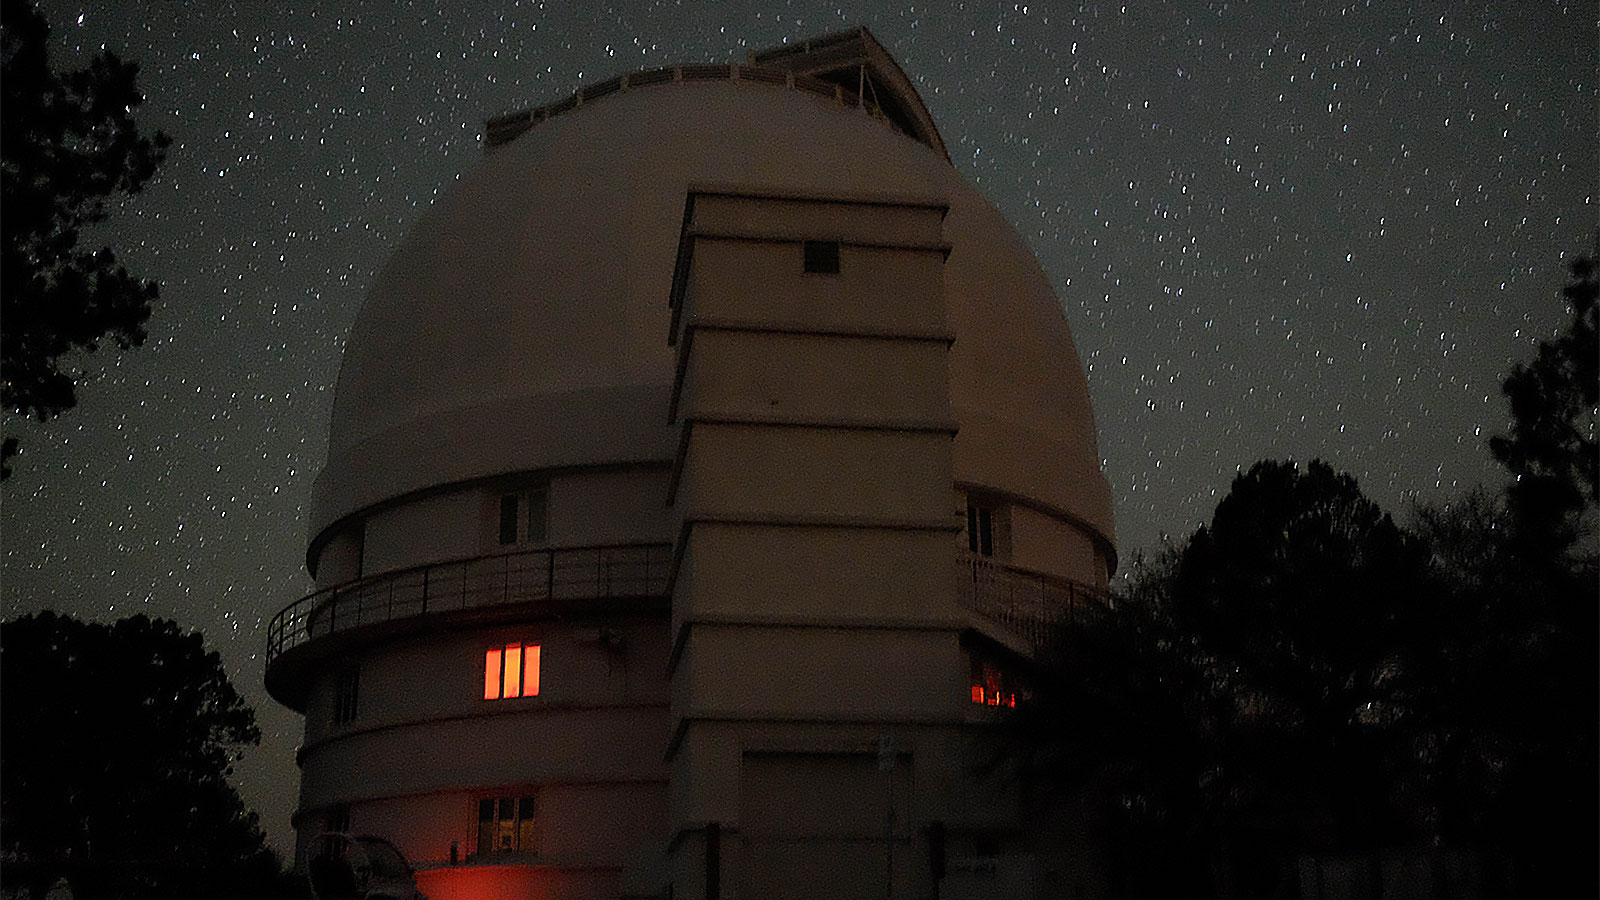 A picture of a massive, white-domed telescope.